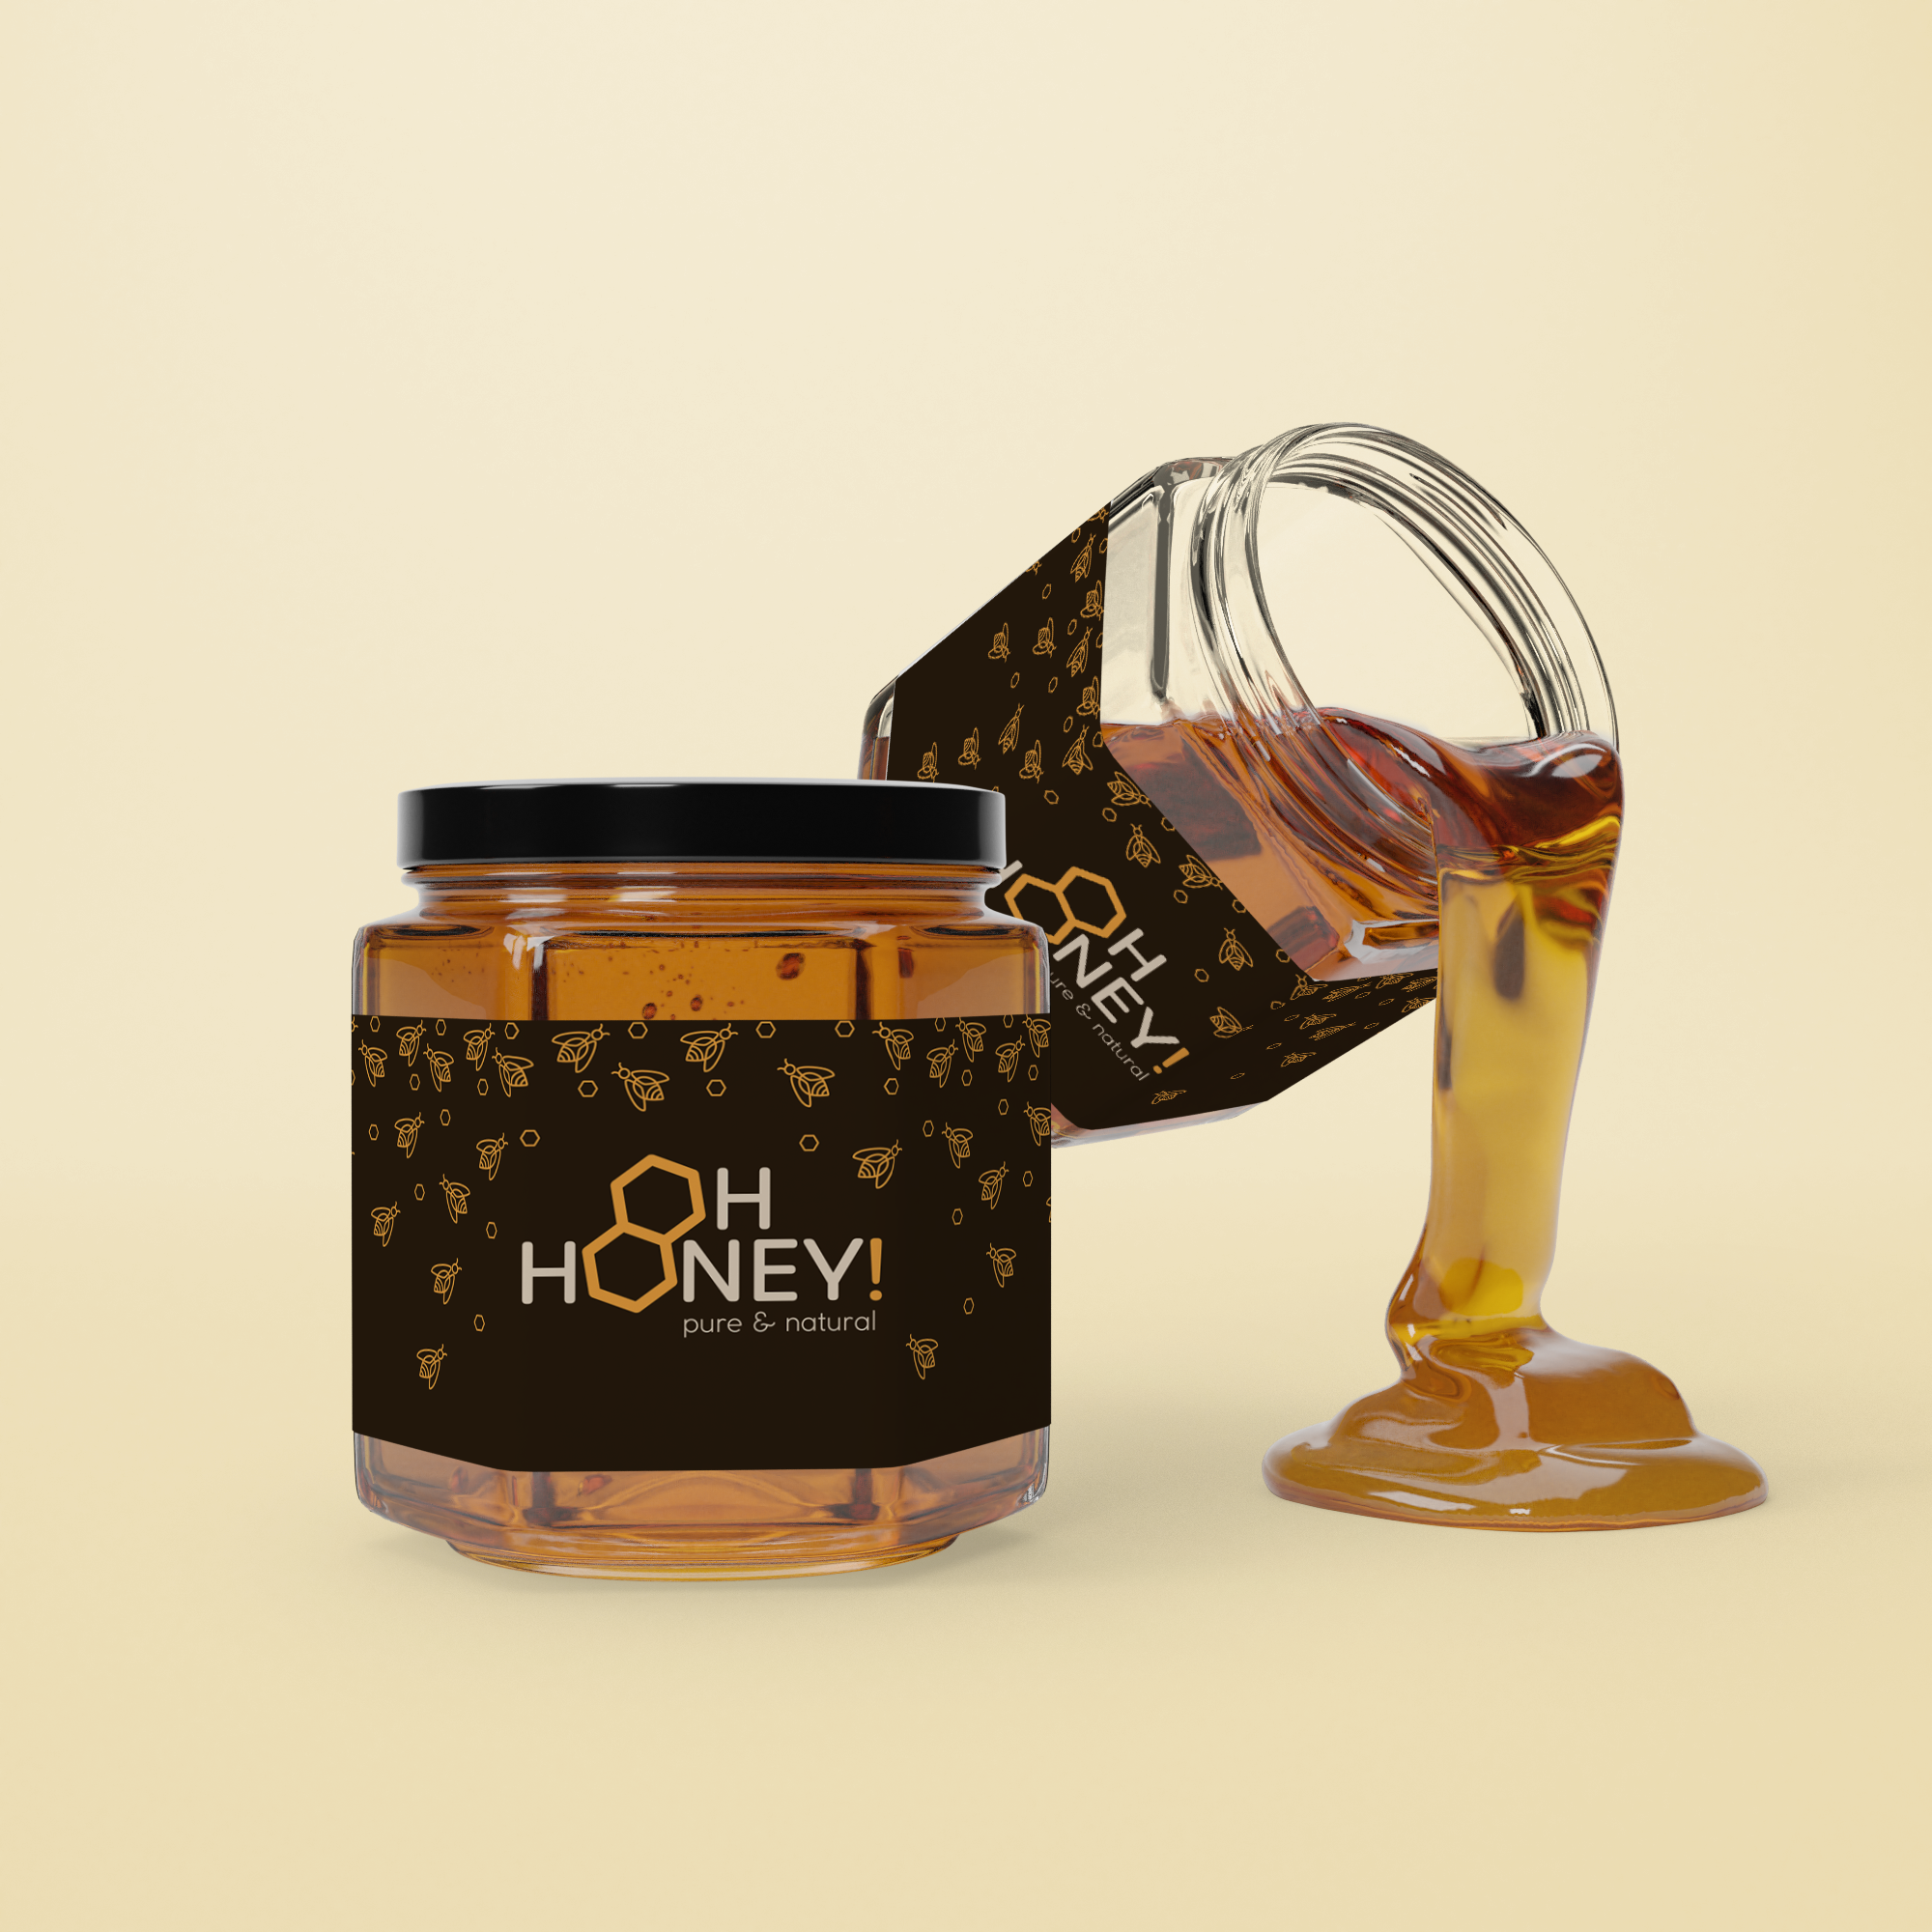 Oh Honey! Pure & Natural Honey